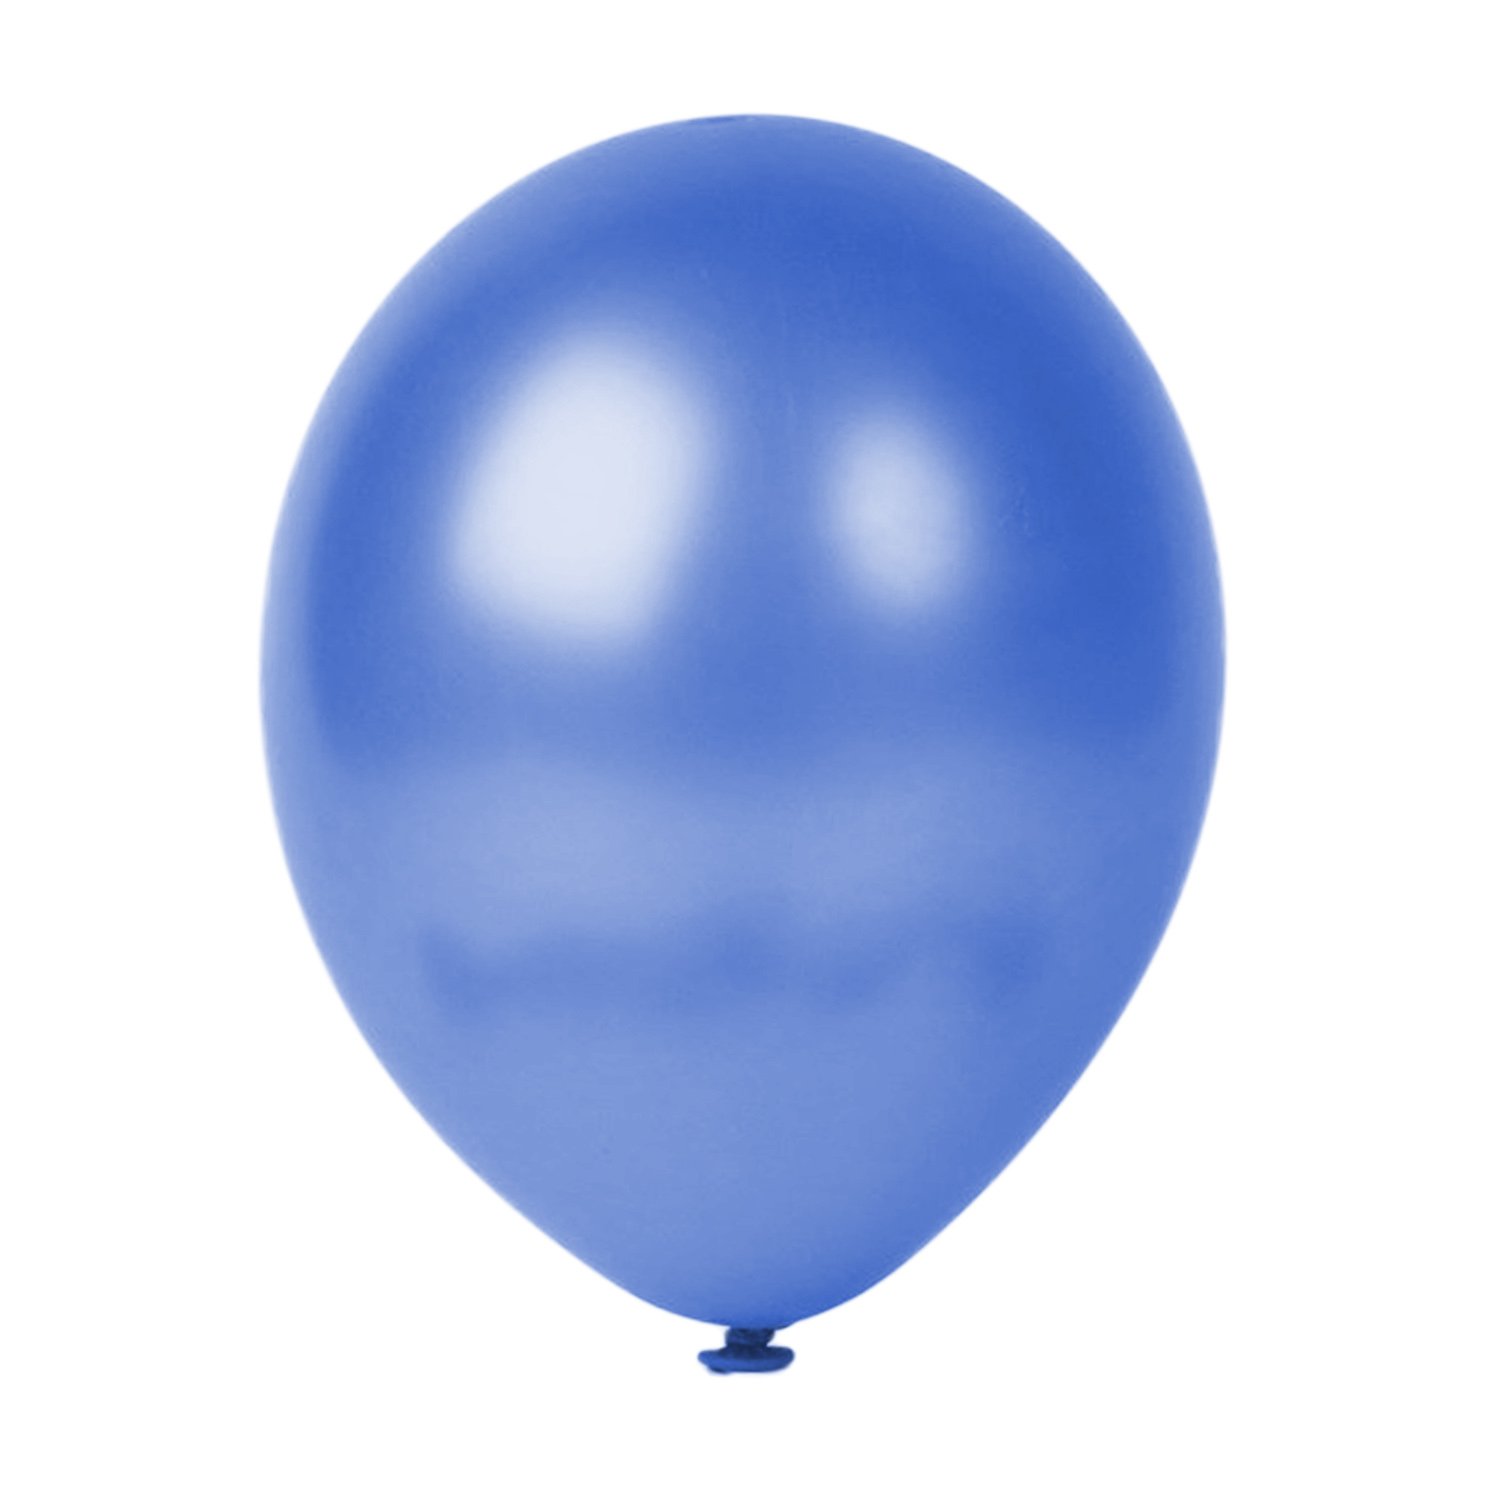 100er SET - Latex Luftballon - 12inch - Blau - Metallic (glänzend)